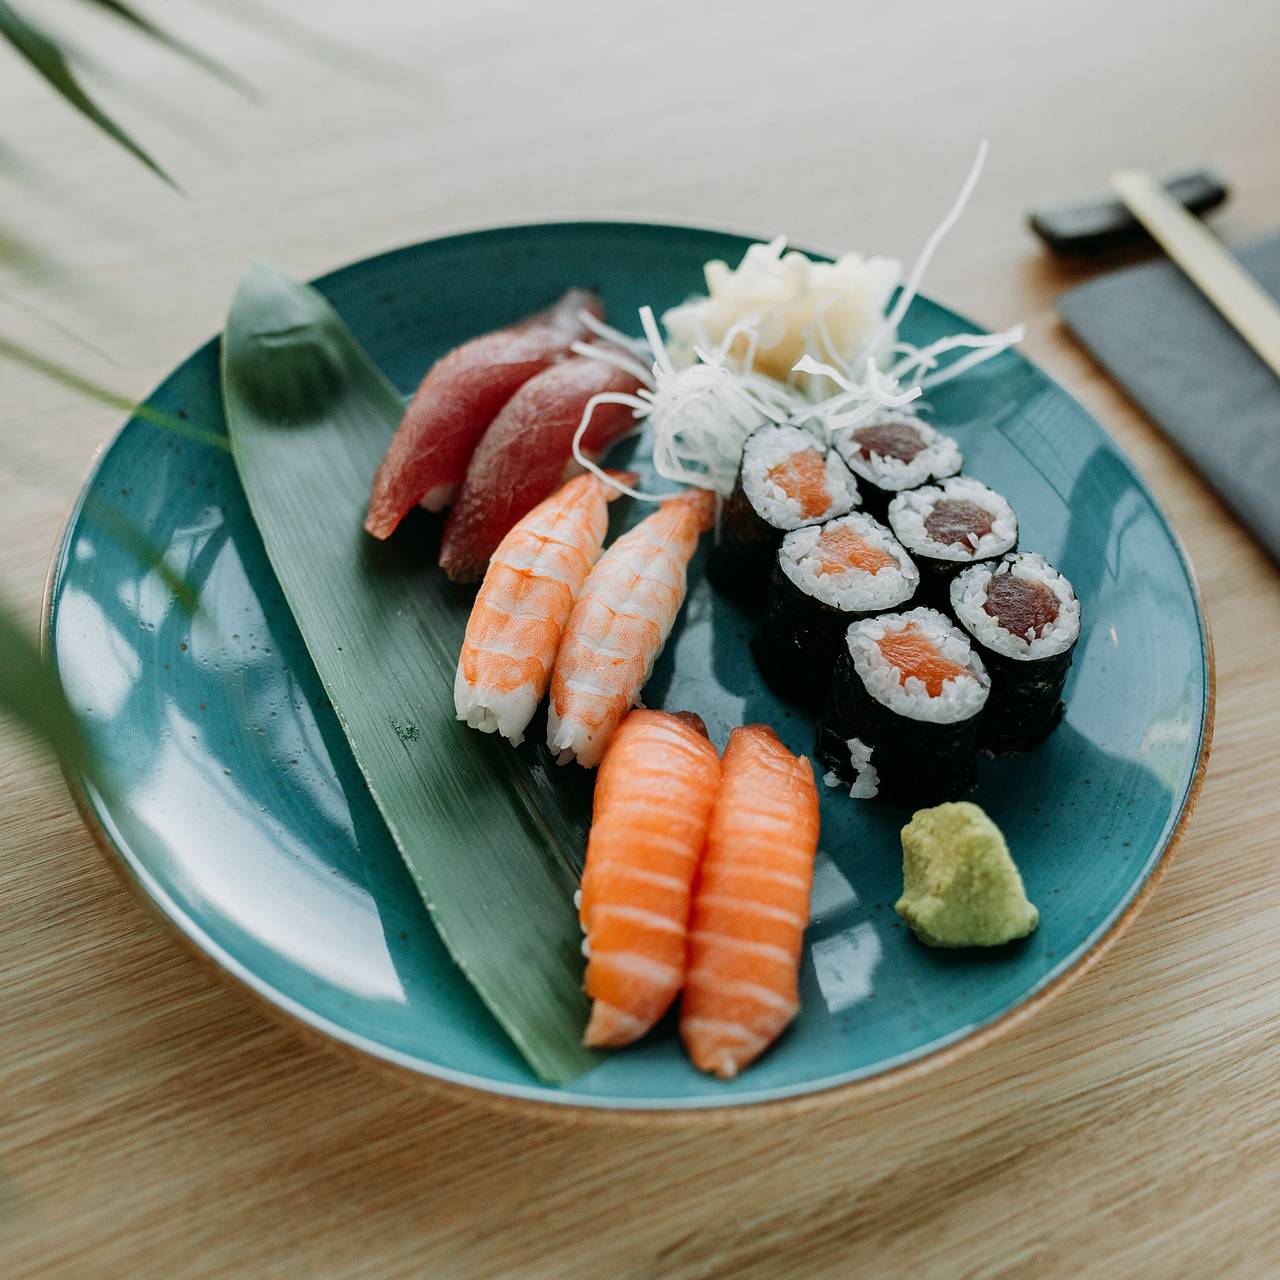 Предложения со словом «суши»